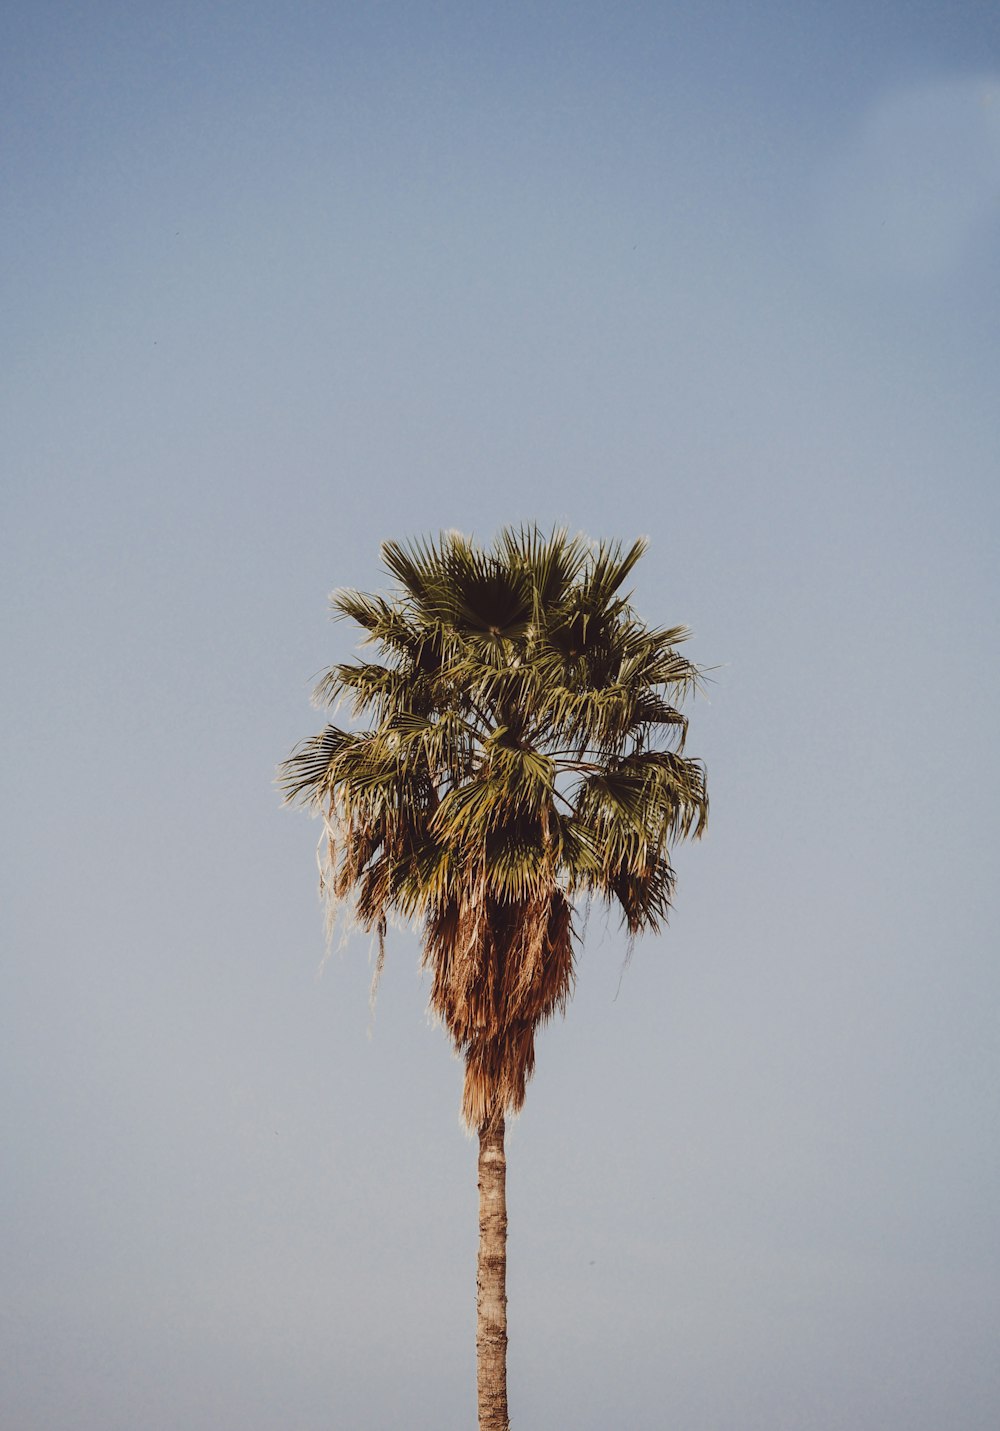 photo of palm tree